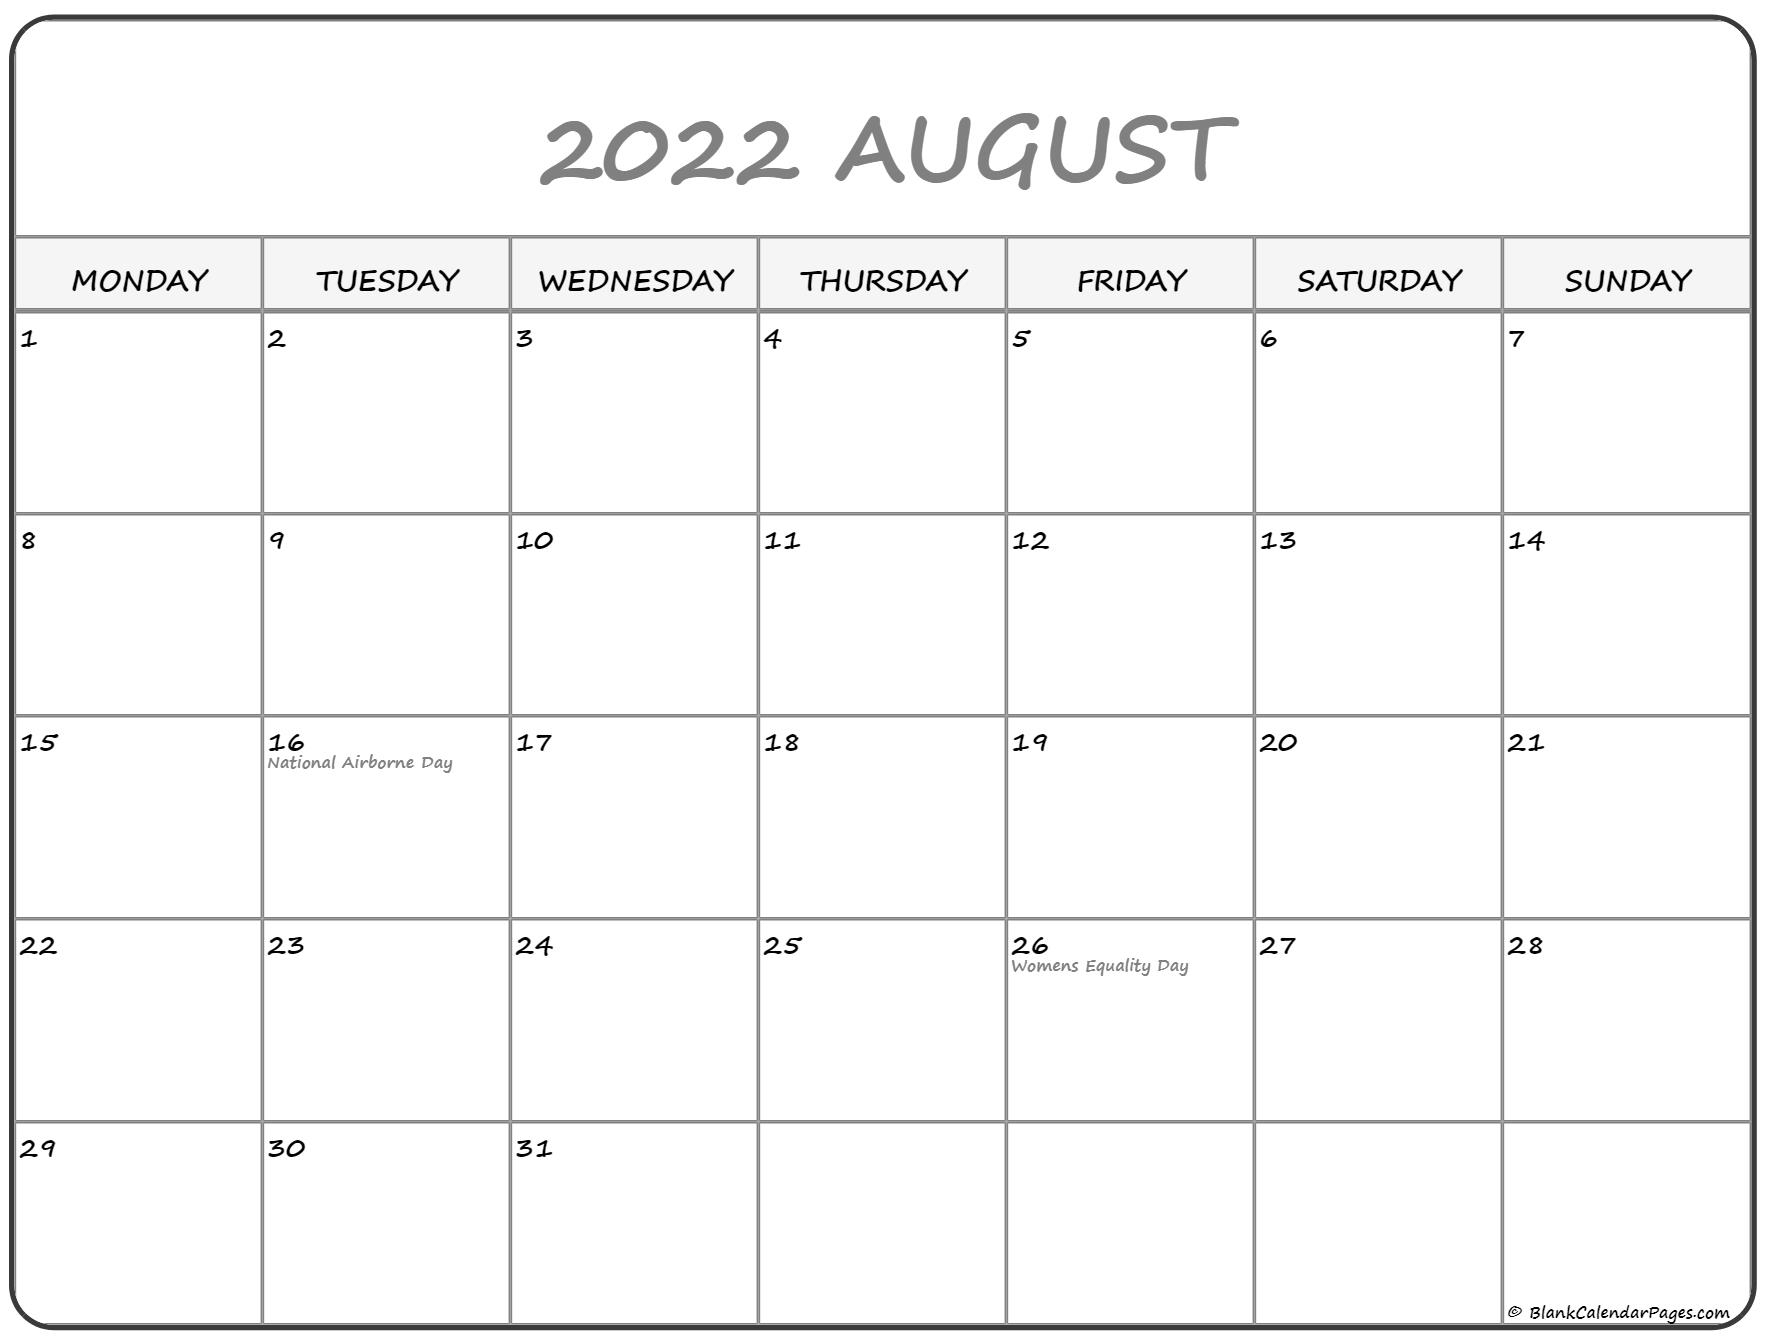 August 2022 Monday Calendar | Monday To Sunday